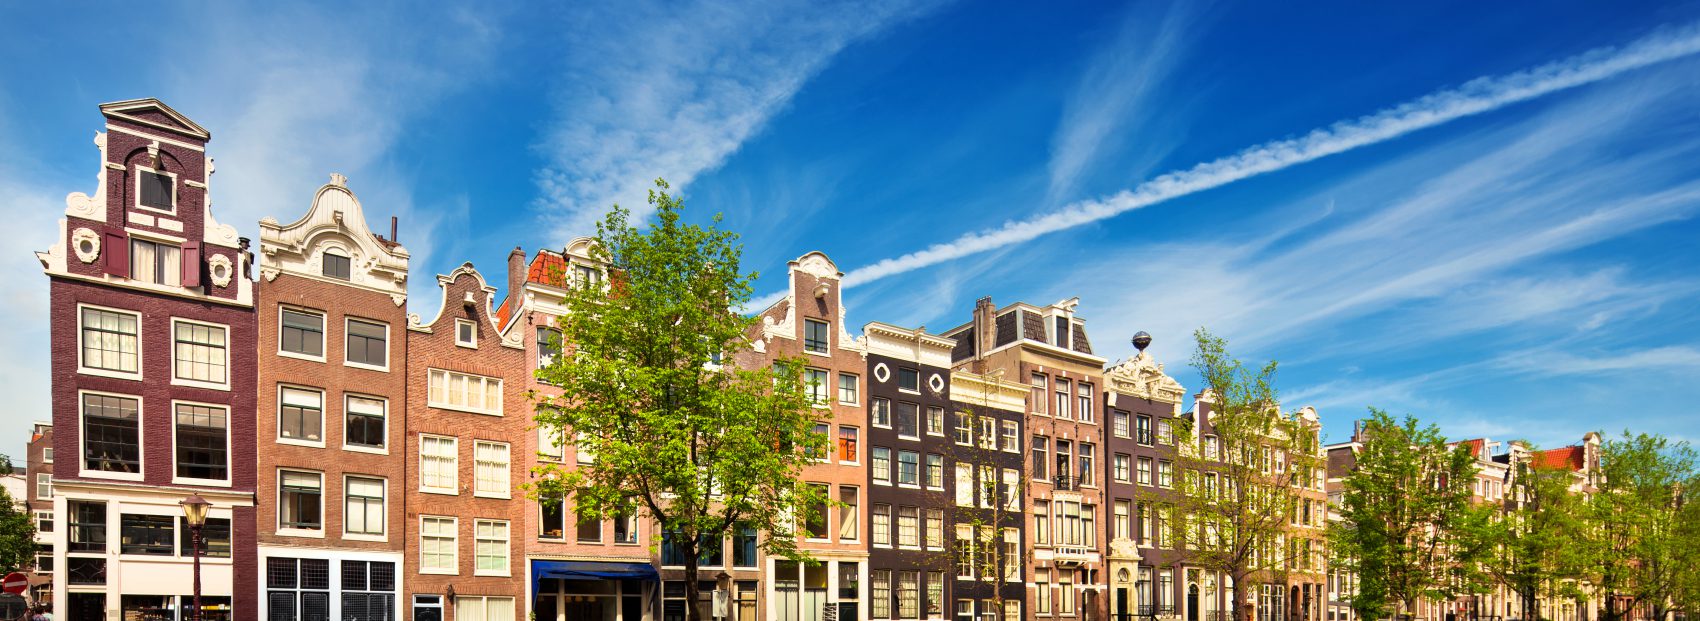 Haarlem shopping city